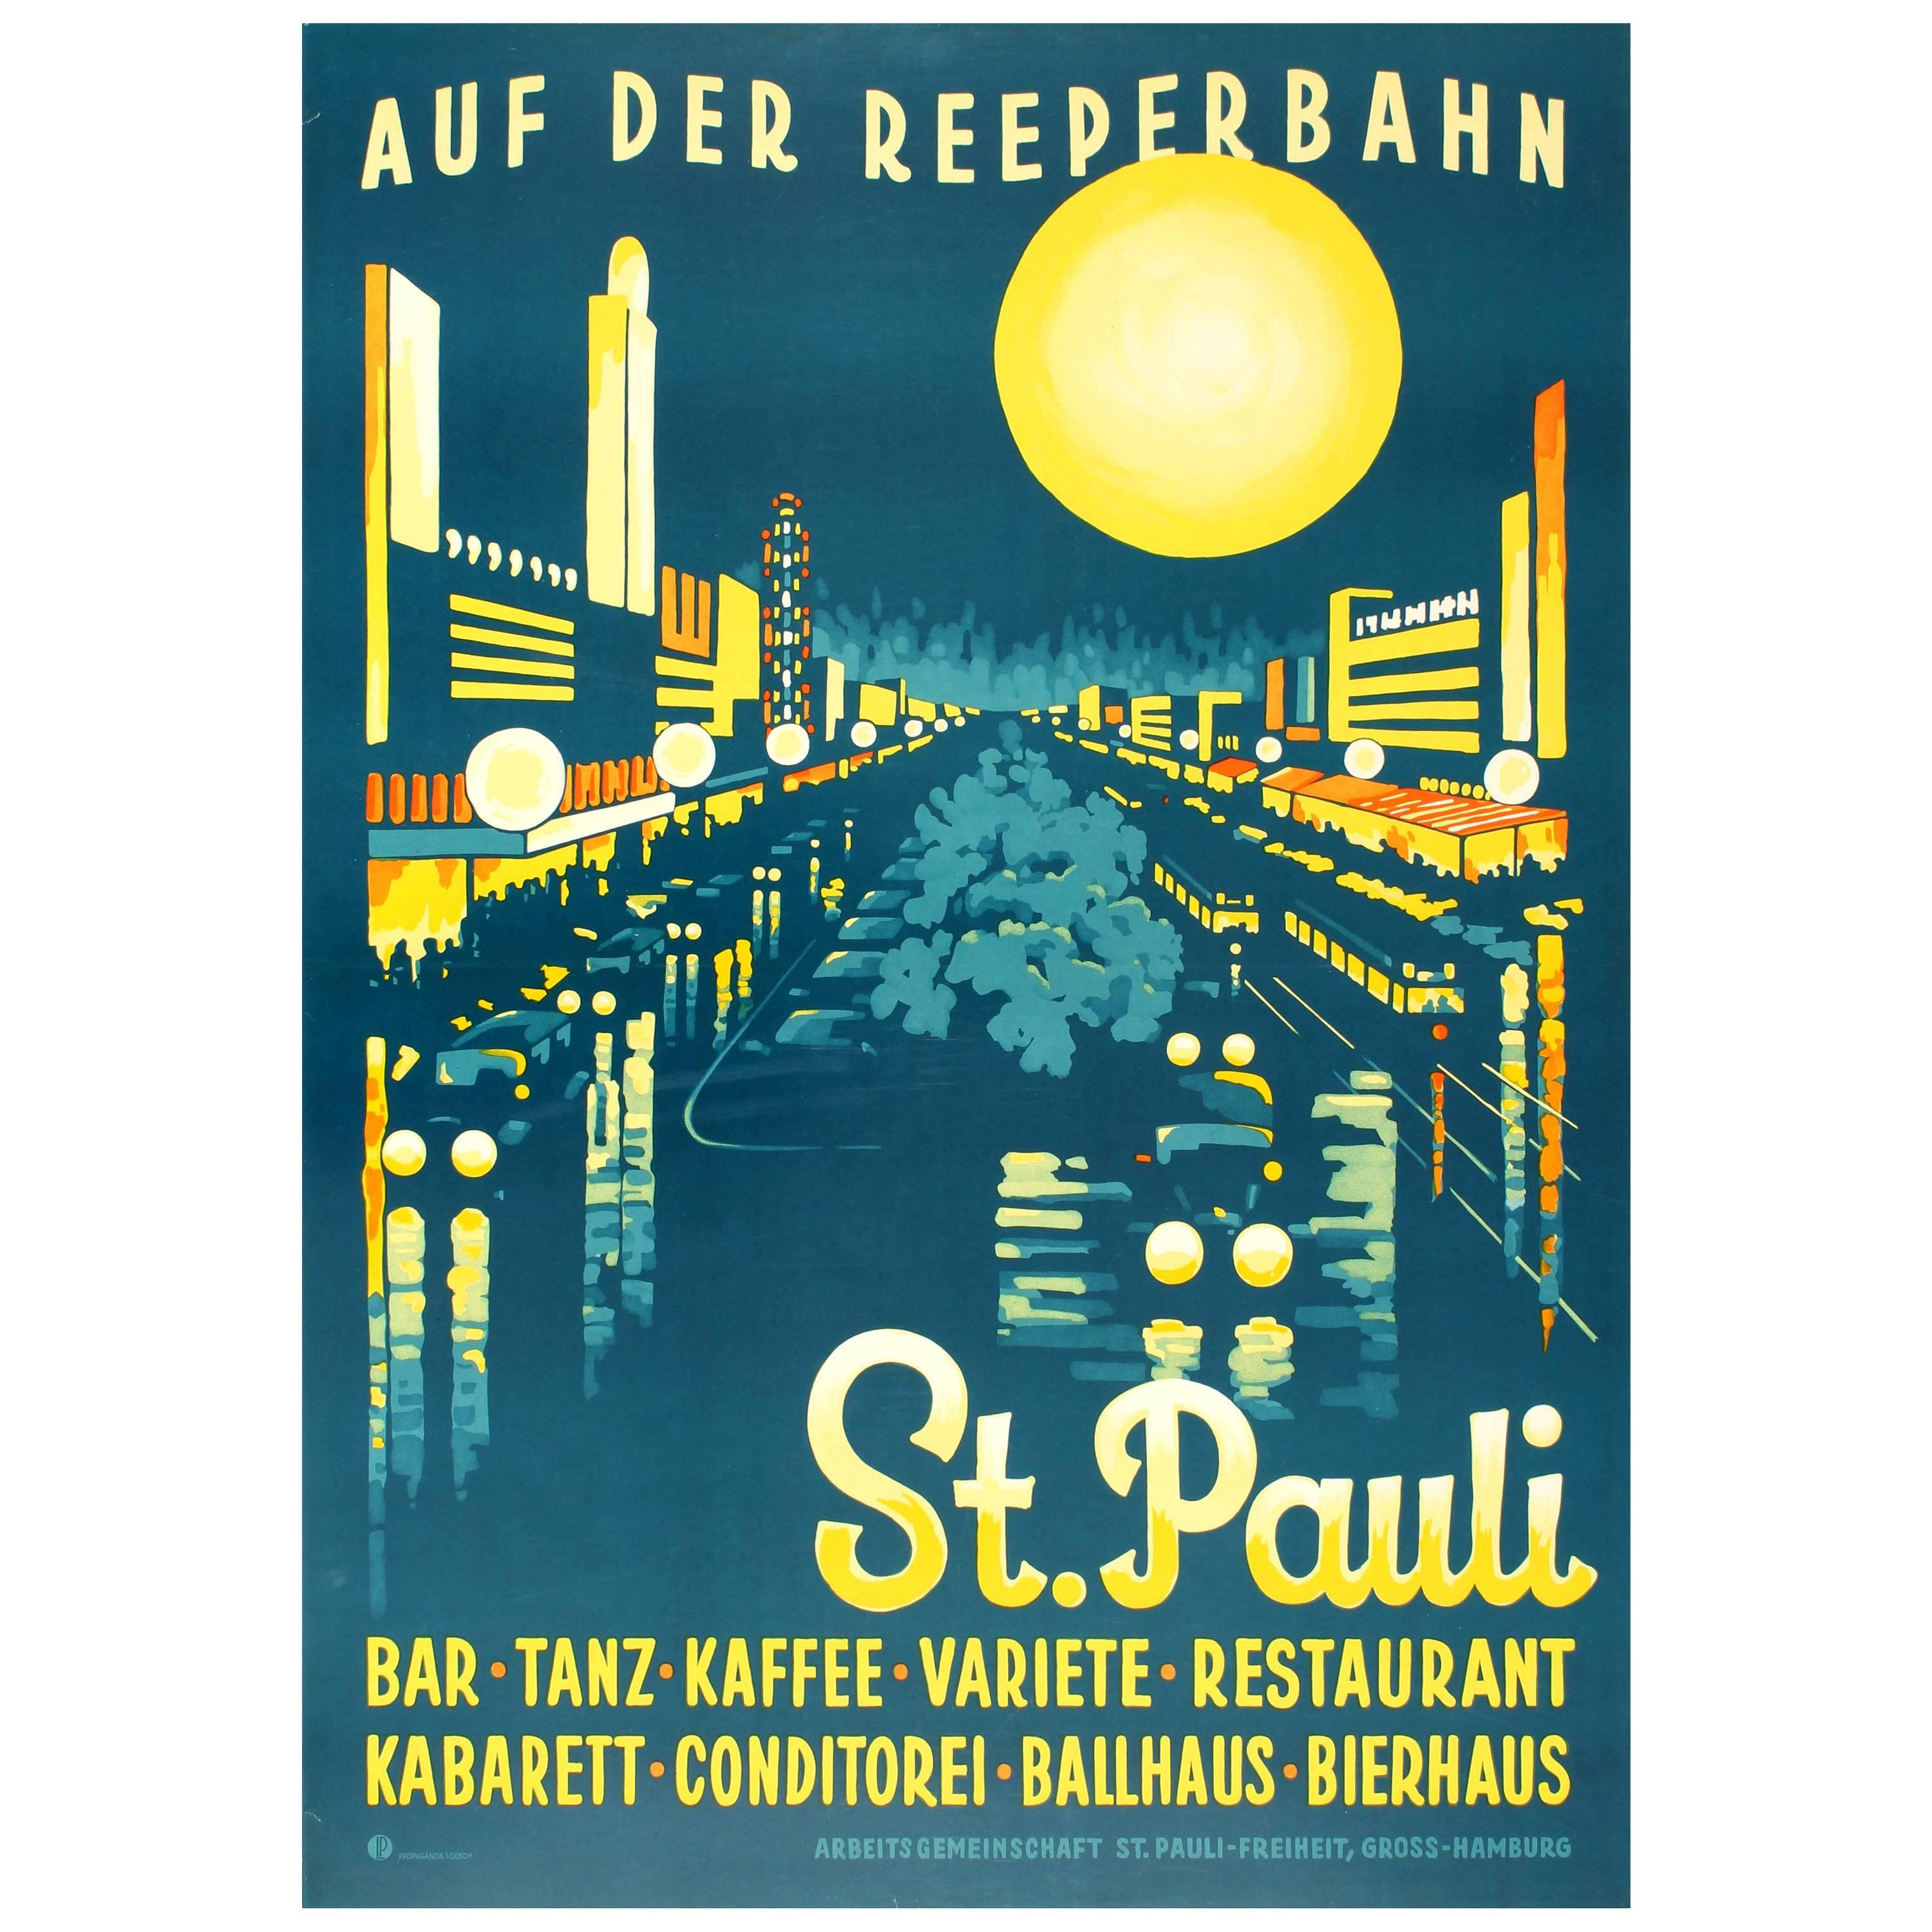 Original Vintage Art Deco Travel Poster for St Pauli Auf Der Reeperbahn at Night